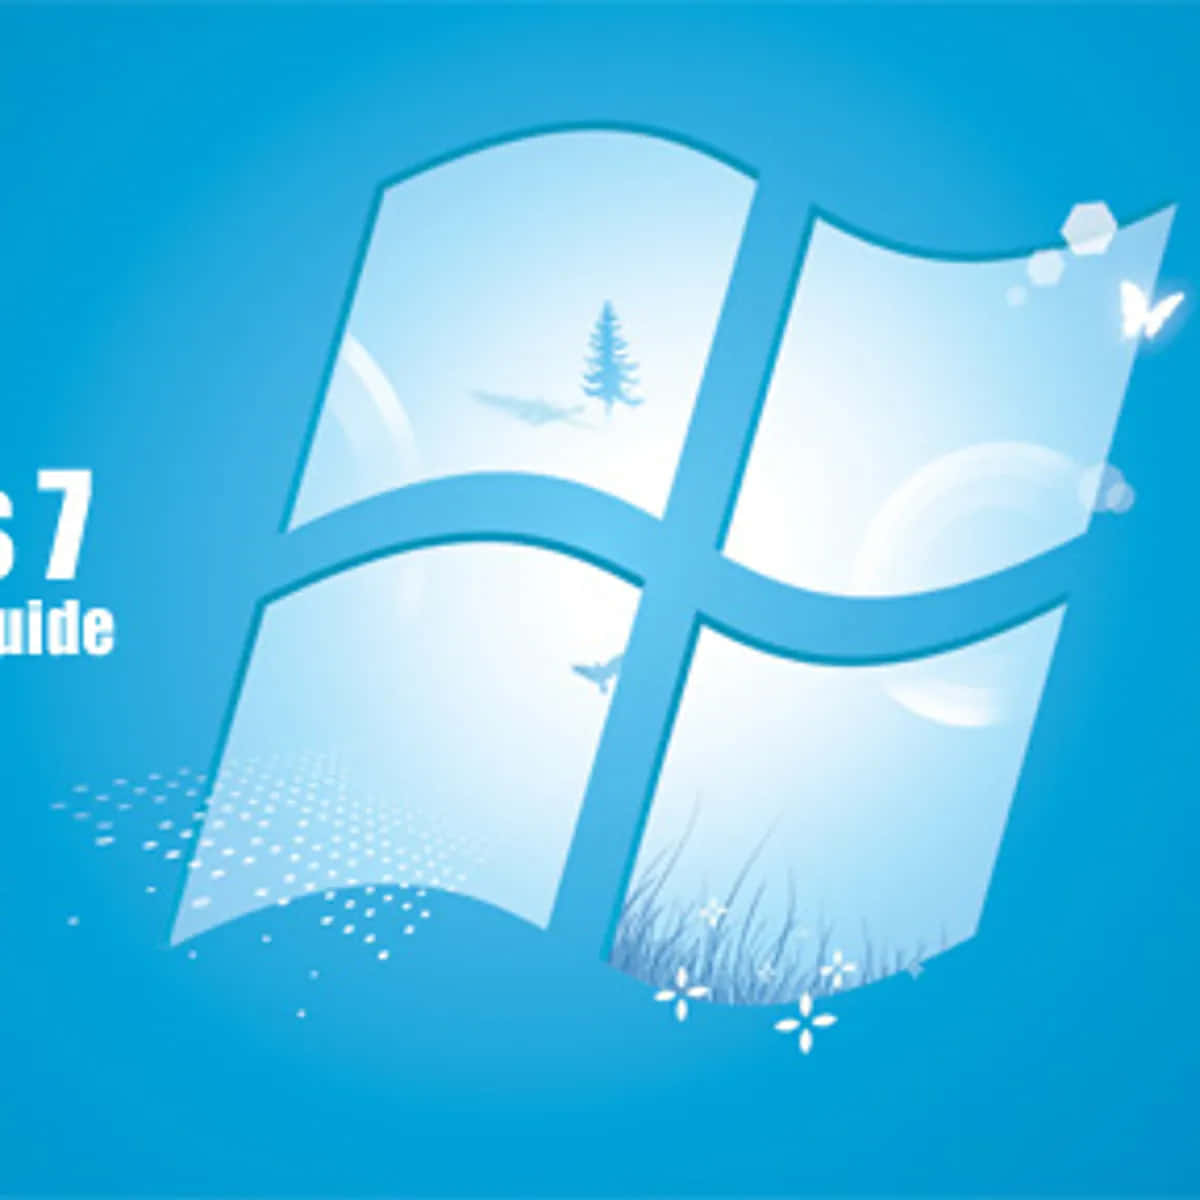 Windows 7 ultimate guide.